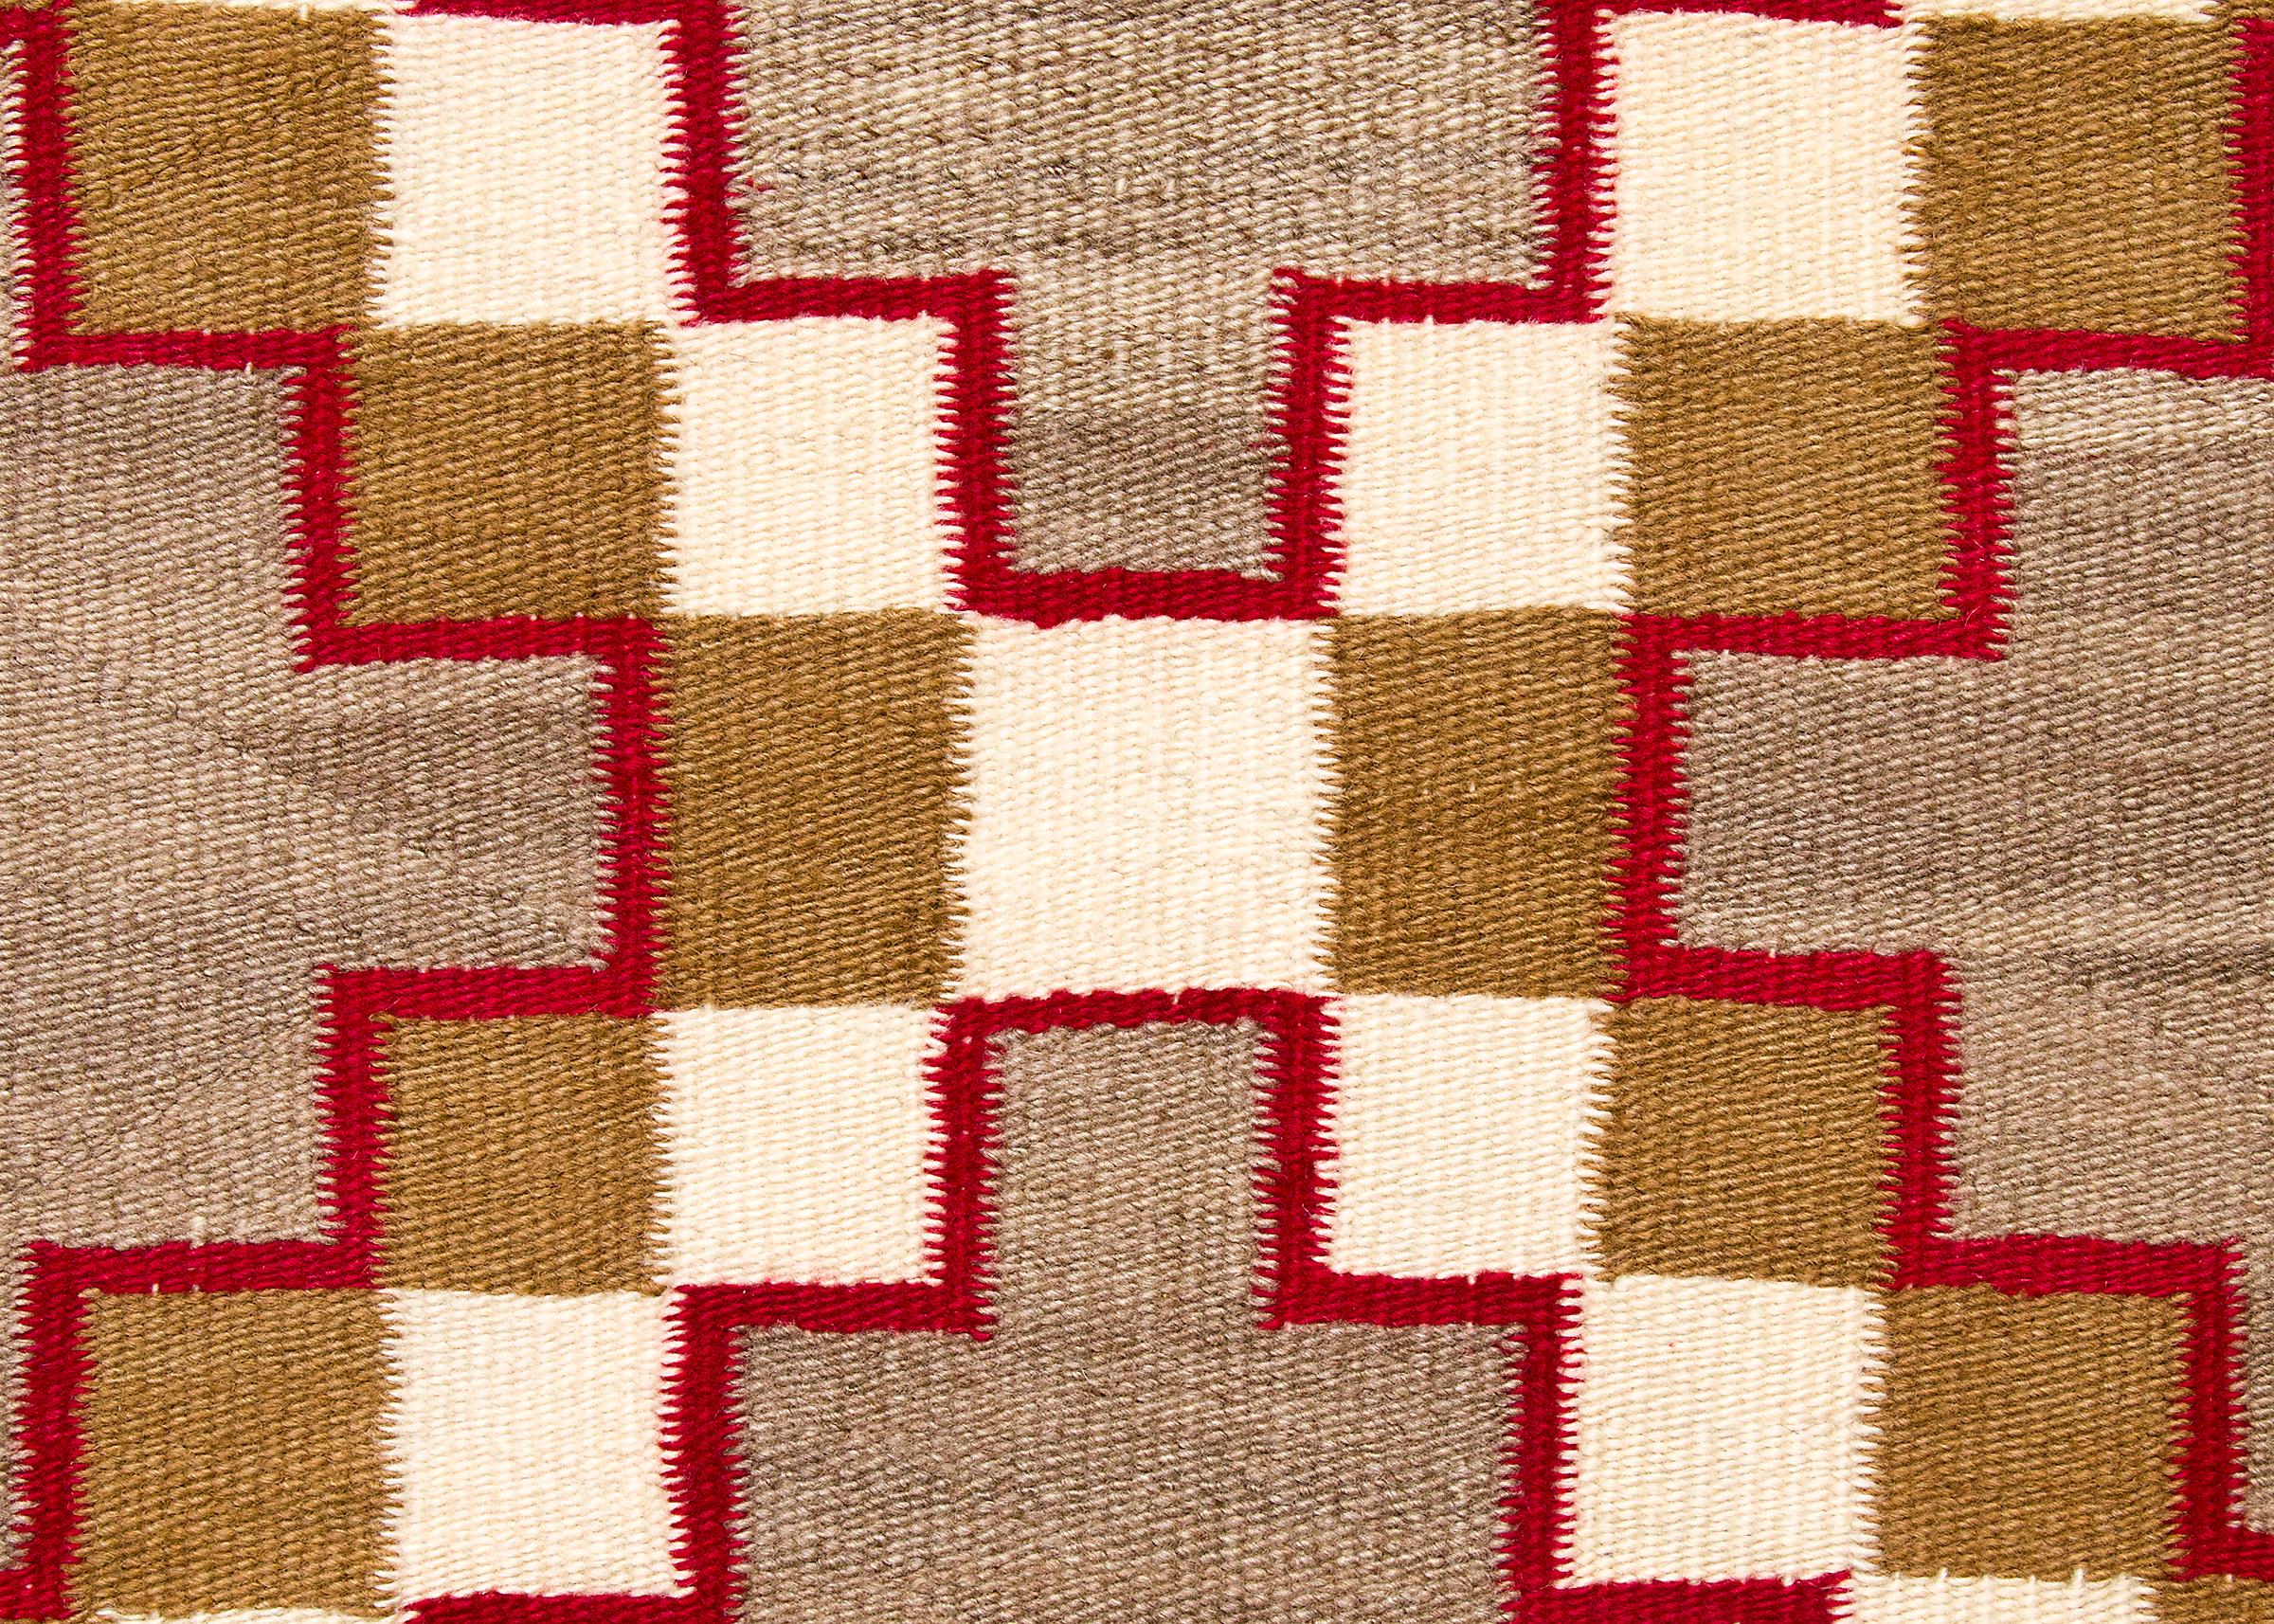 Native American Vintage Navajo Area Rug, Trading Post Era, circa 1930s, Brown, White, Red, Black